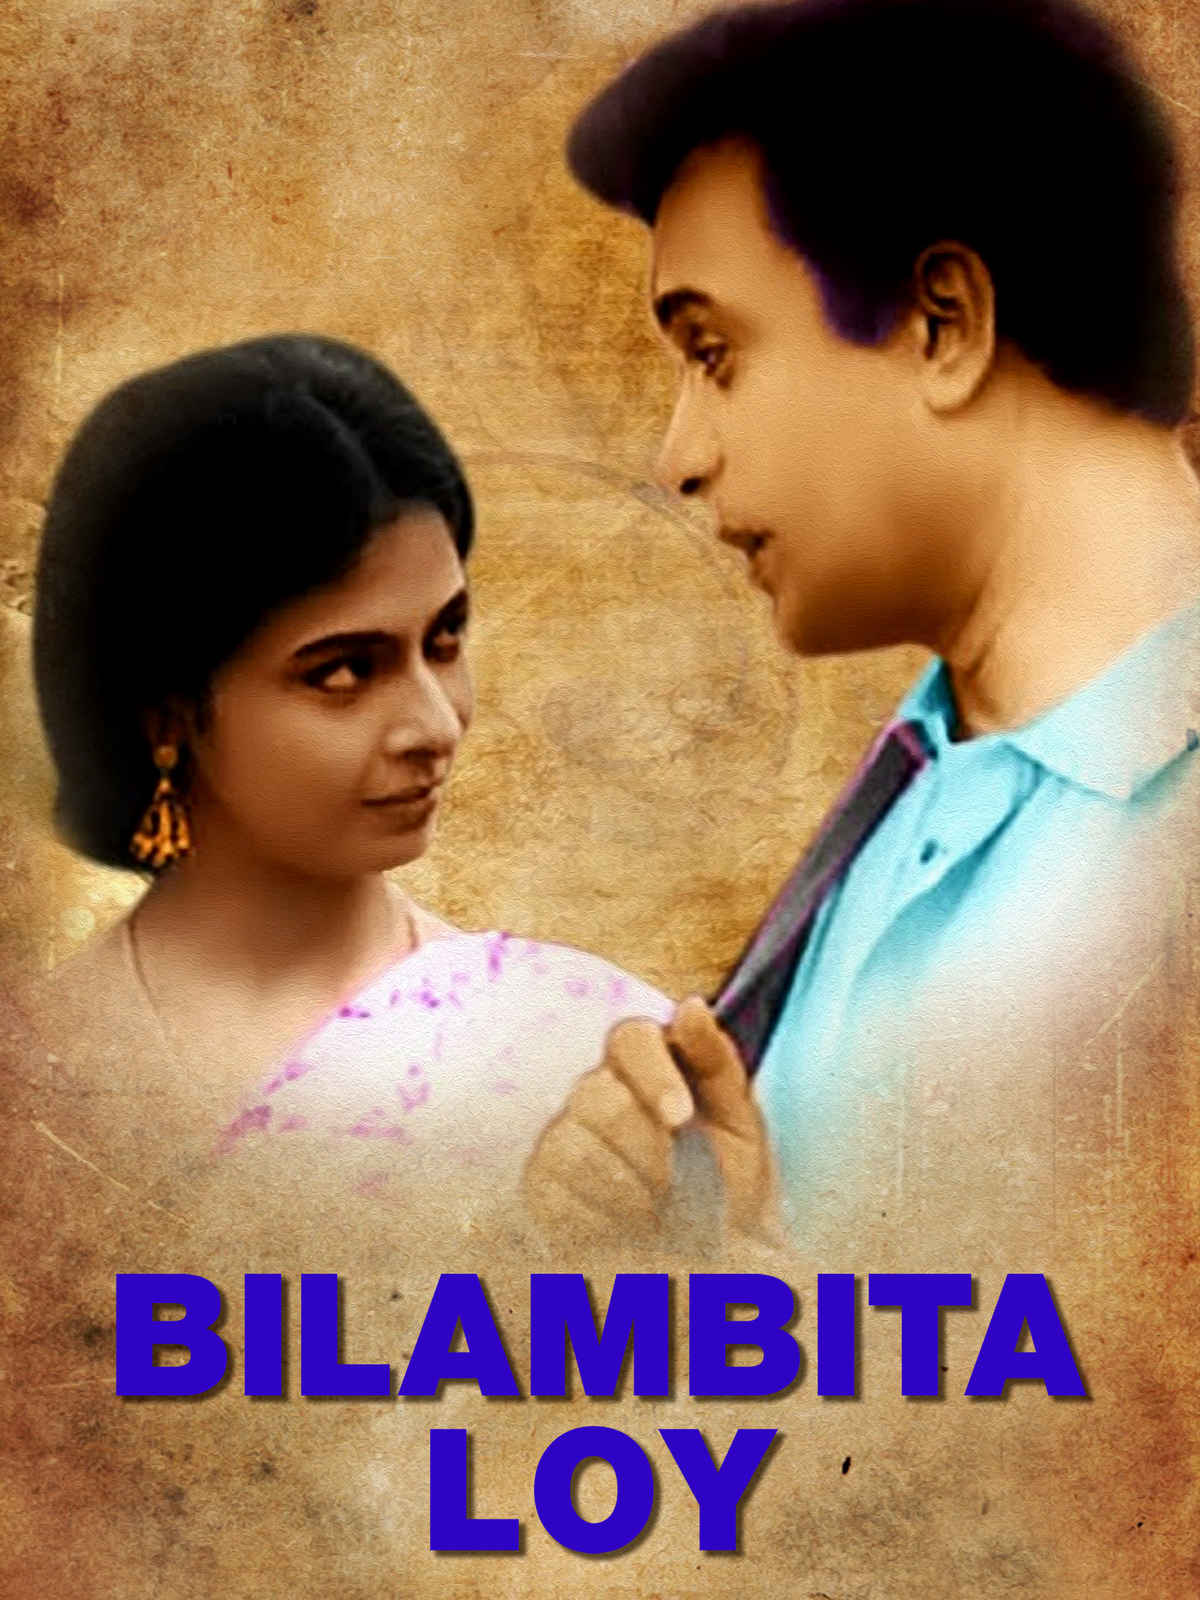 Raja Bhattacharya Best Movies, TV Shows and Web Series List